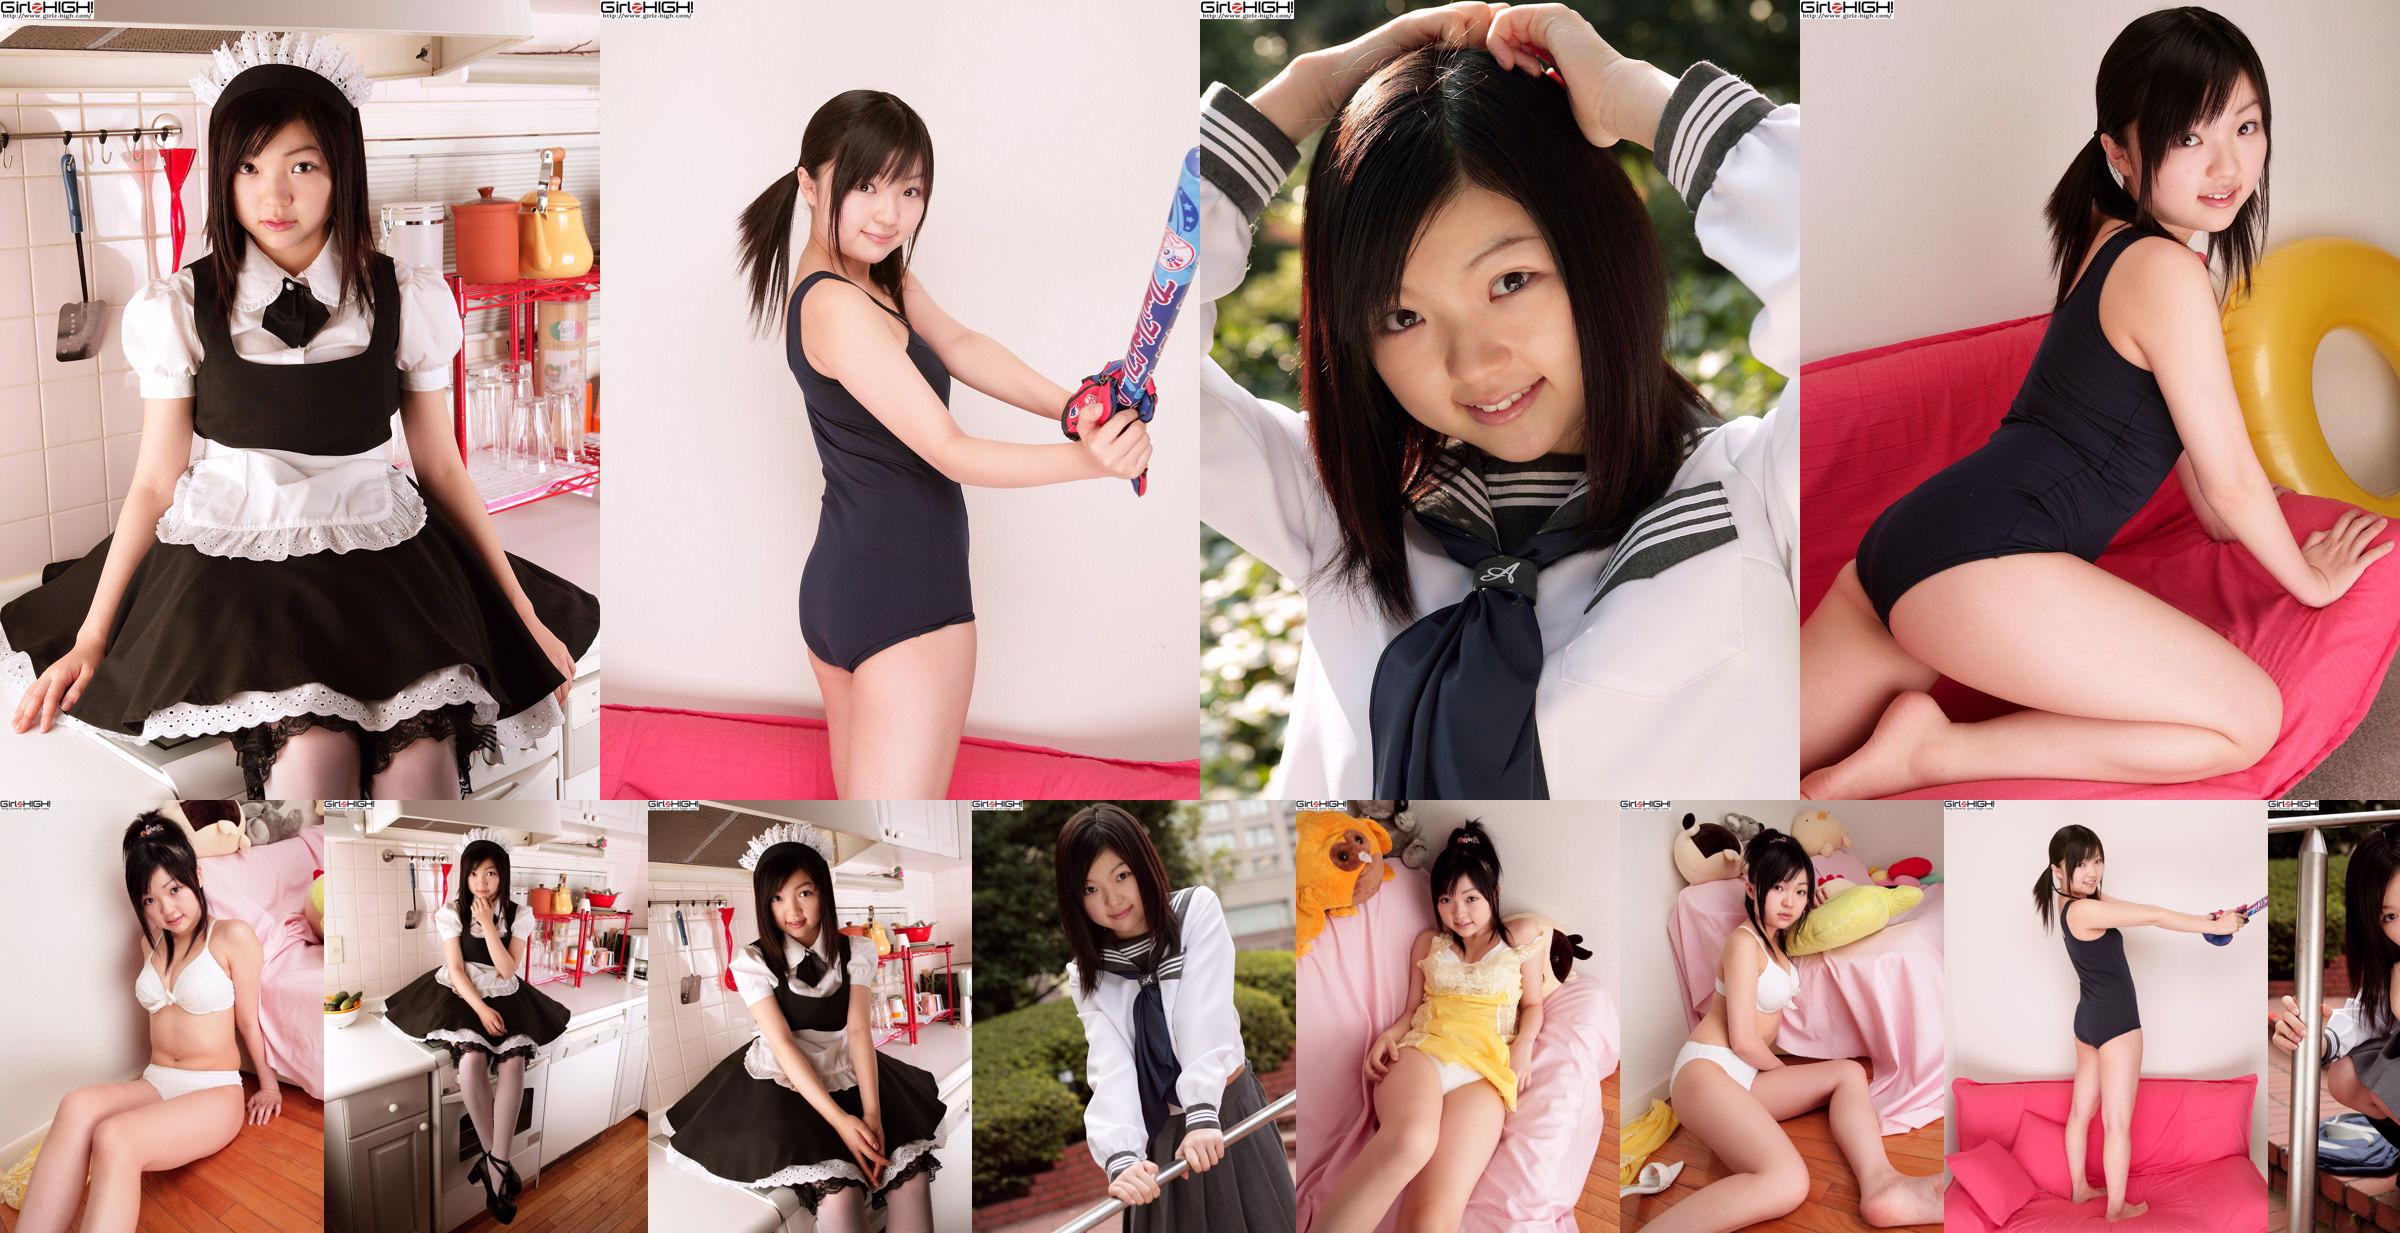 [Girlz-High] Misaki Moe Misaki Gravure Gallery-g074 Photoset 04 No.eba9ae Page 2